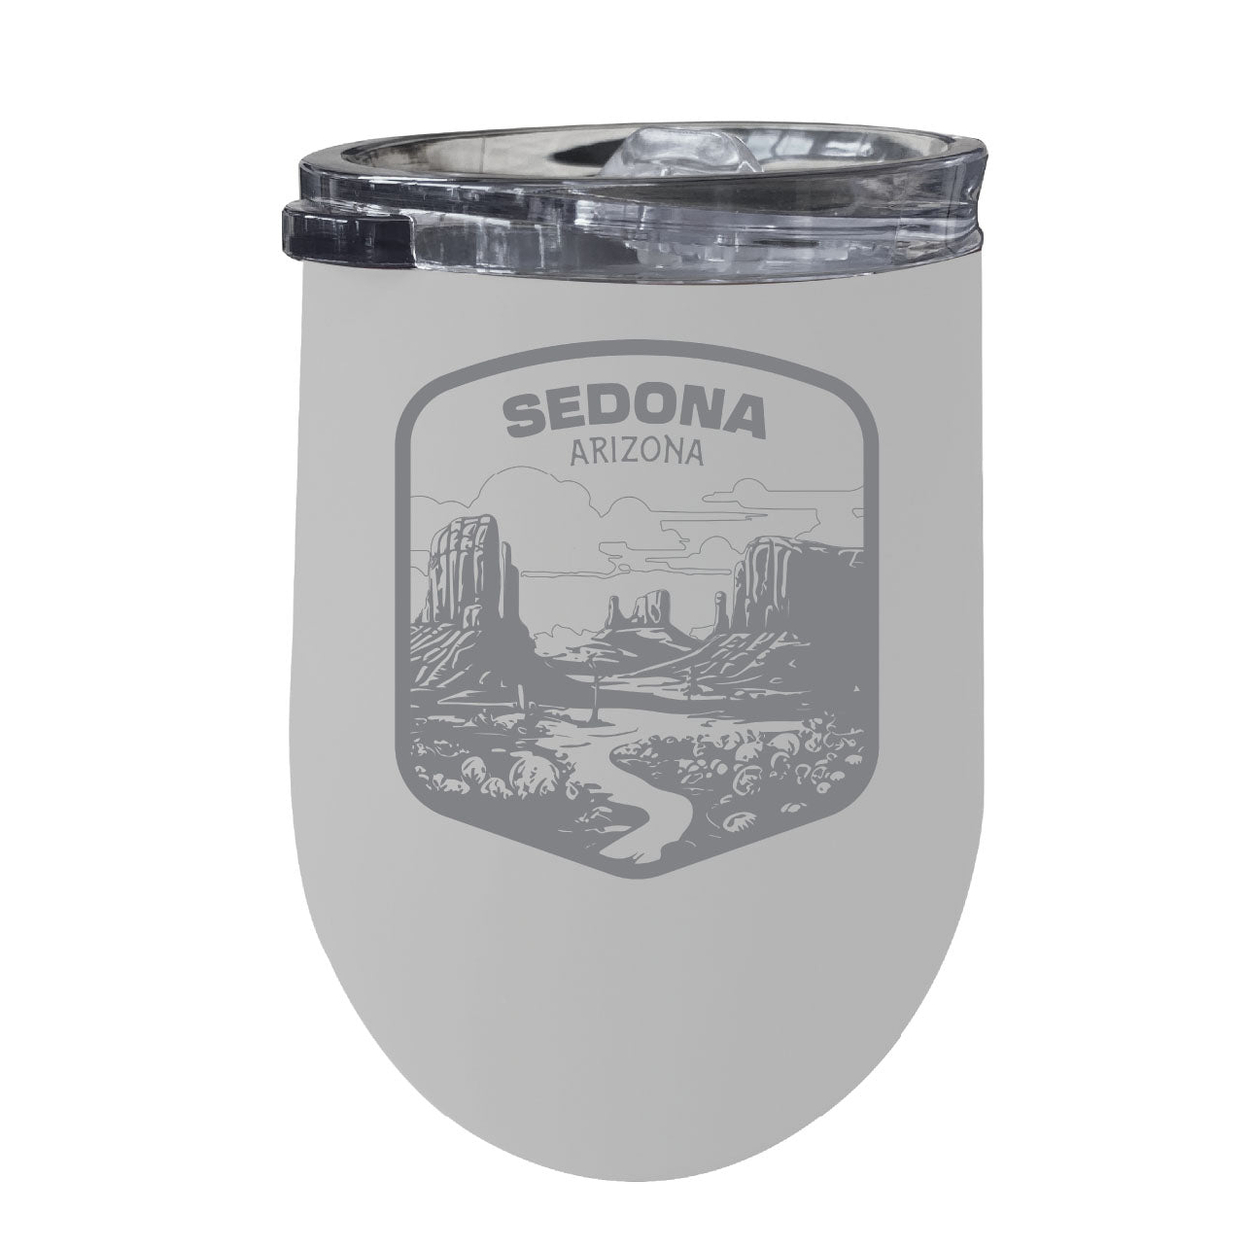 Sedona Arizona Souvenir 12 Oz Engraved Insulated Wine Stainless Steel Tumbler - Black,,Single Unit